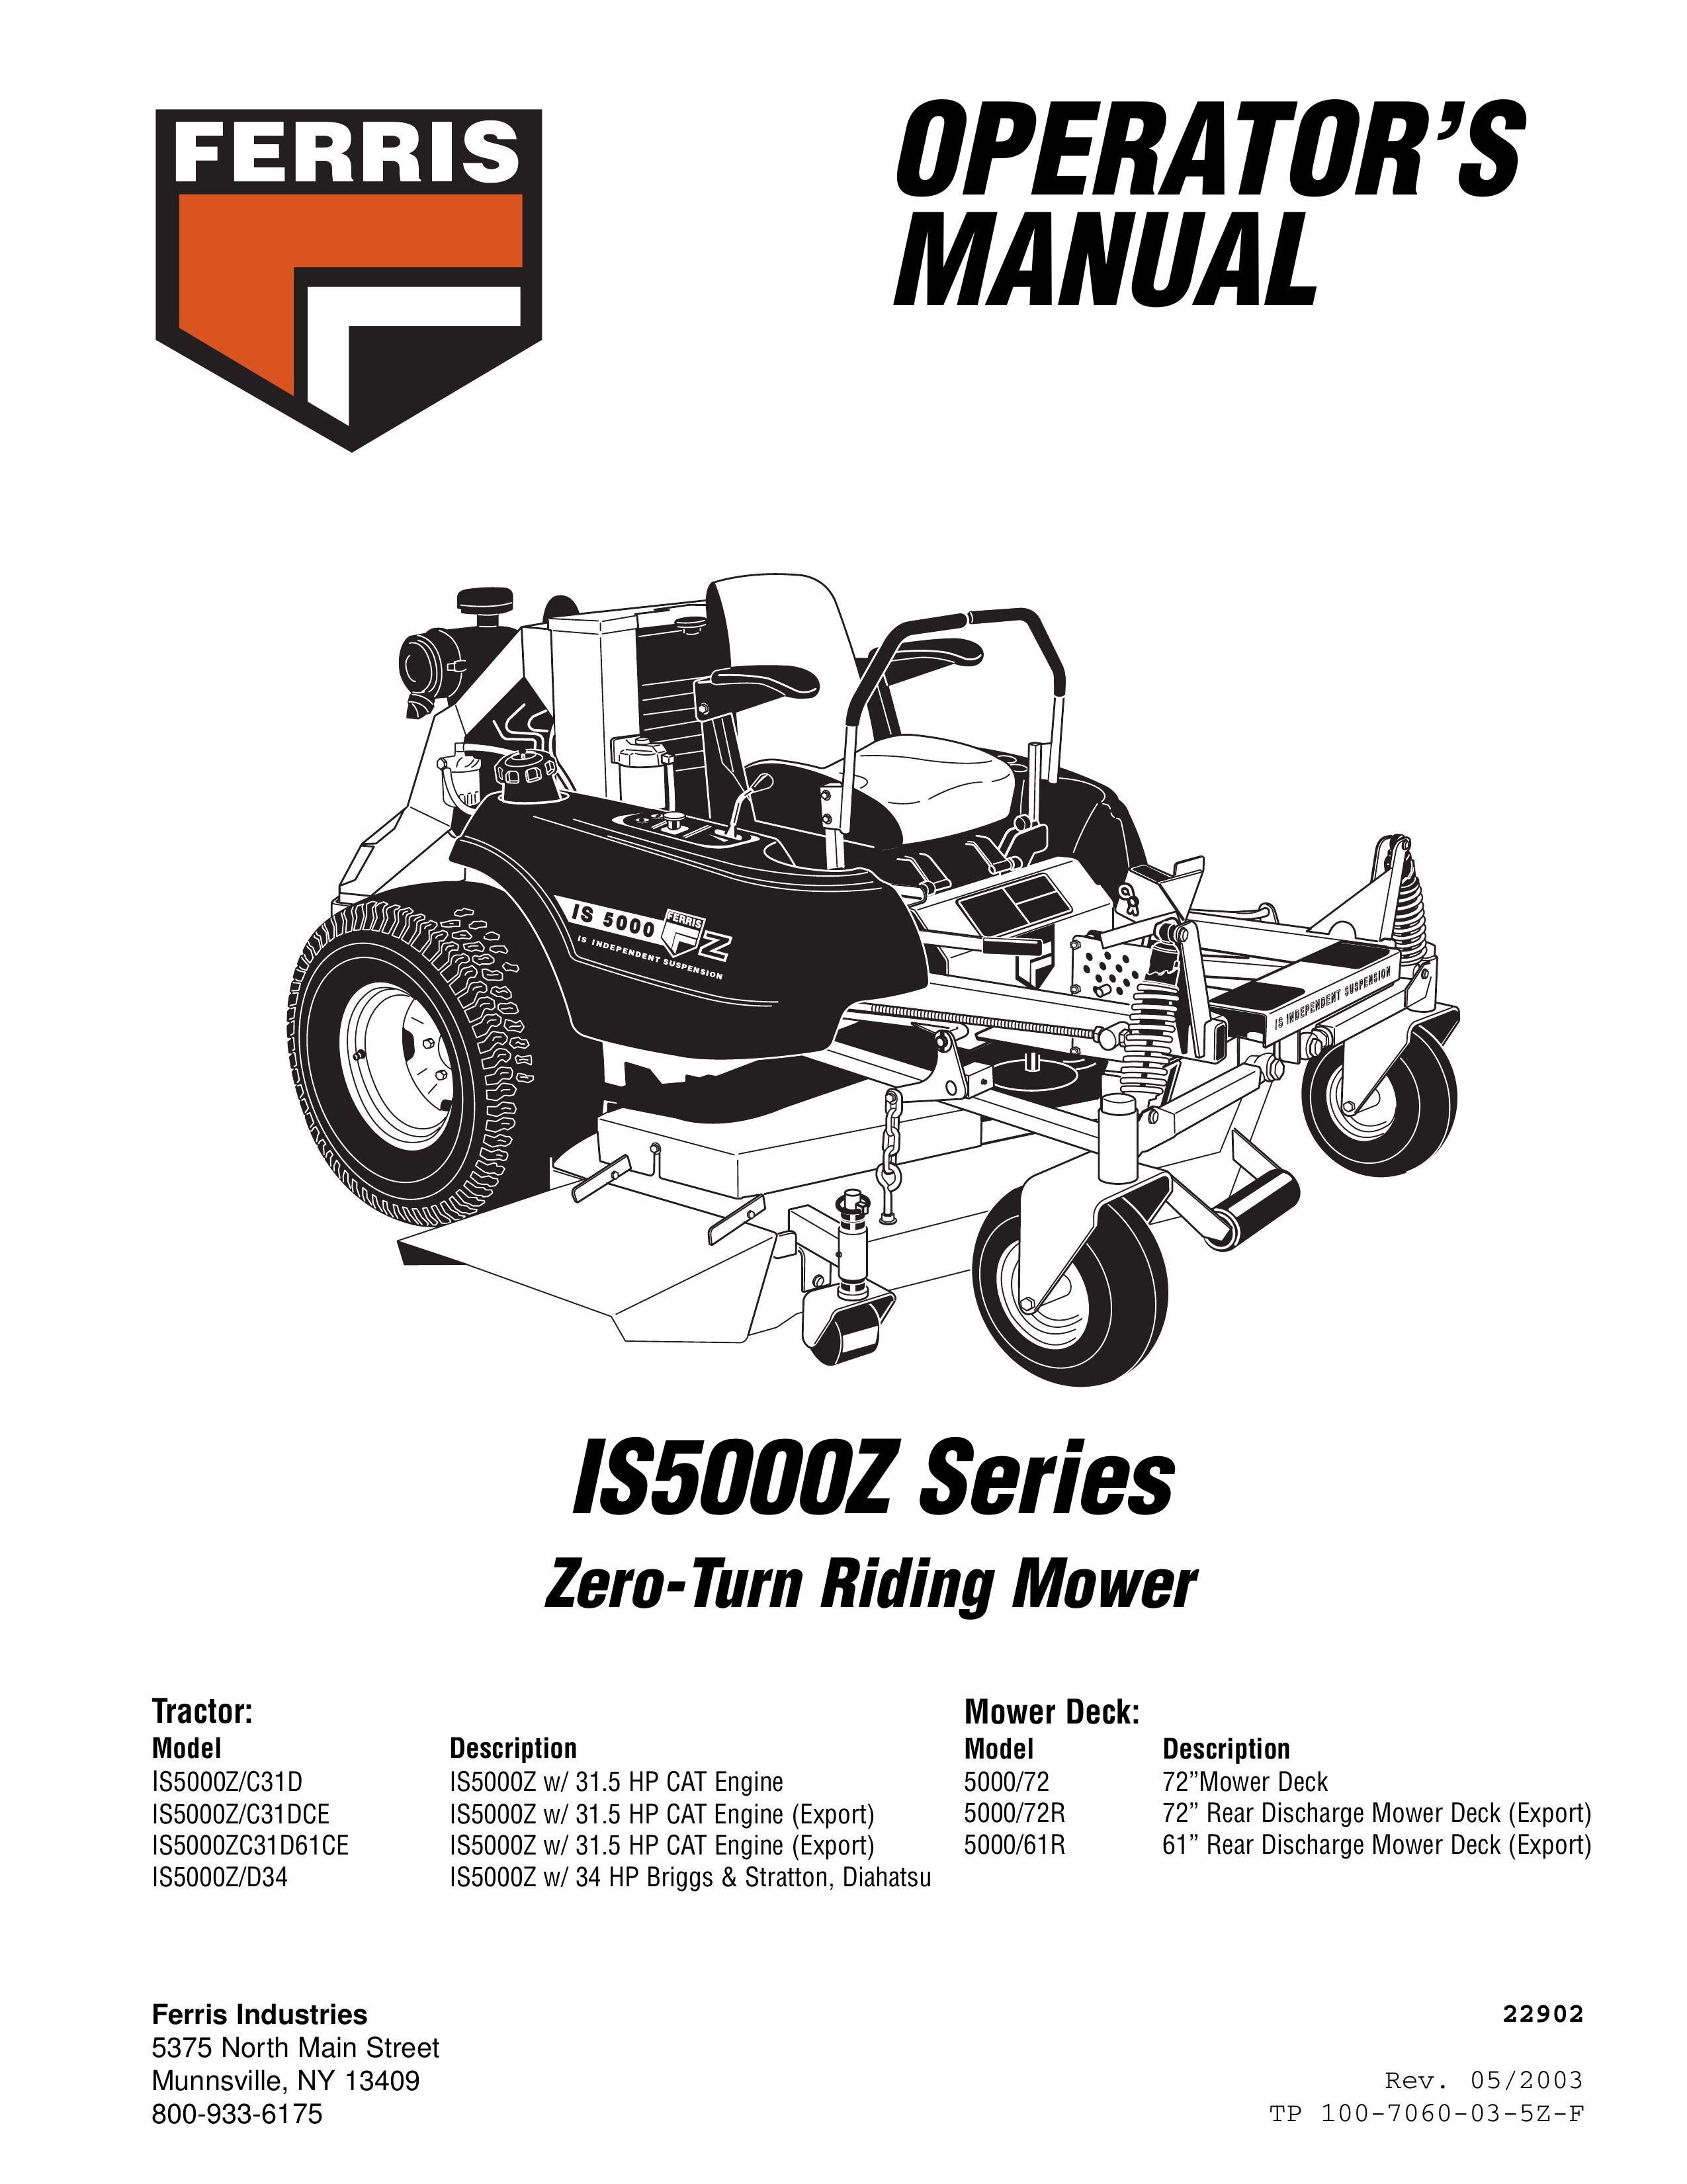 Ferris Industries 5000/72R Lawn Mower User Manual